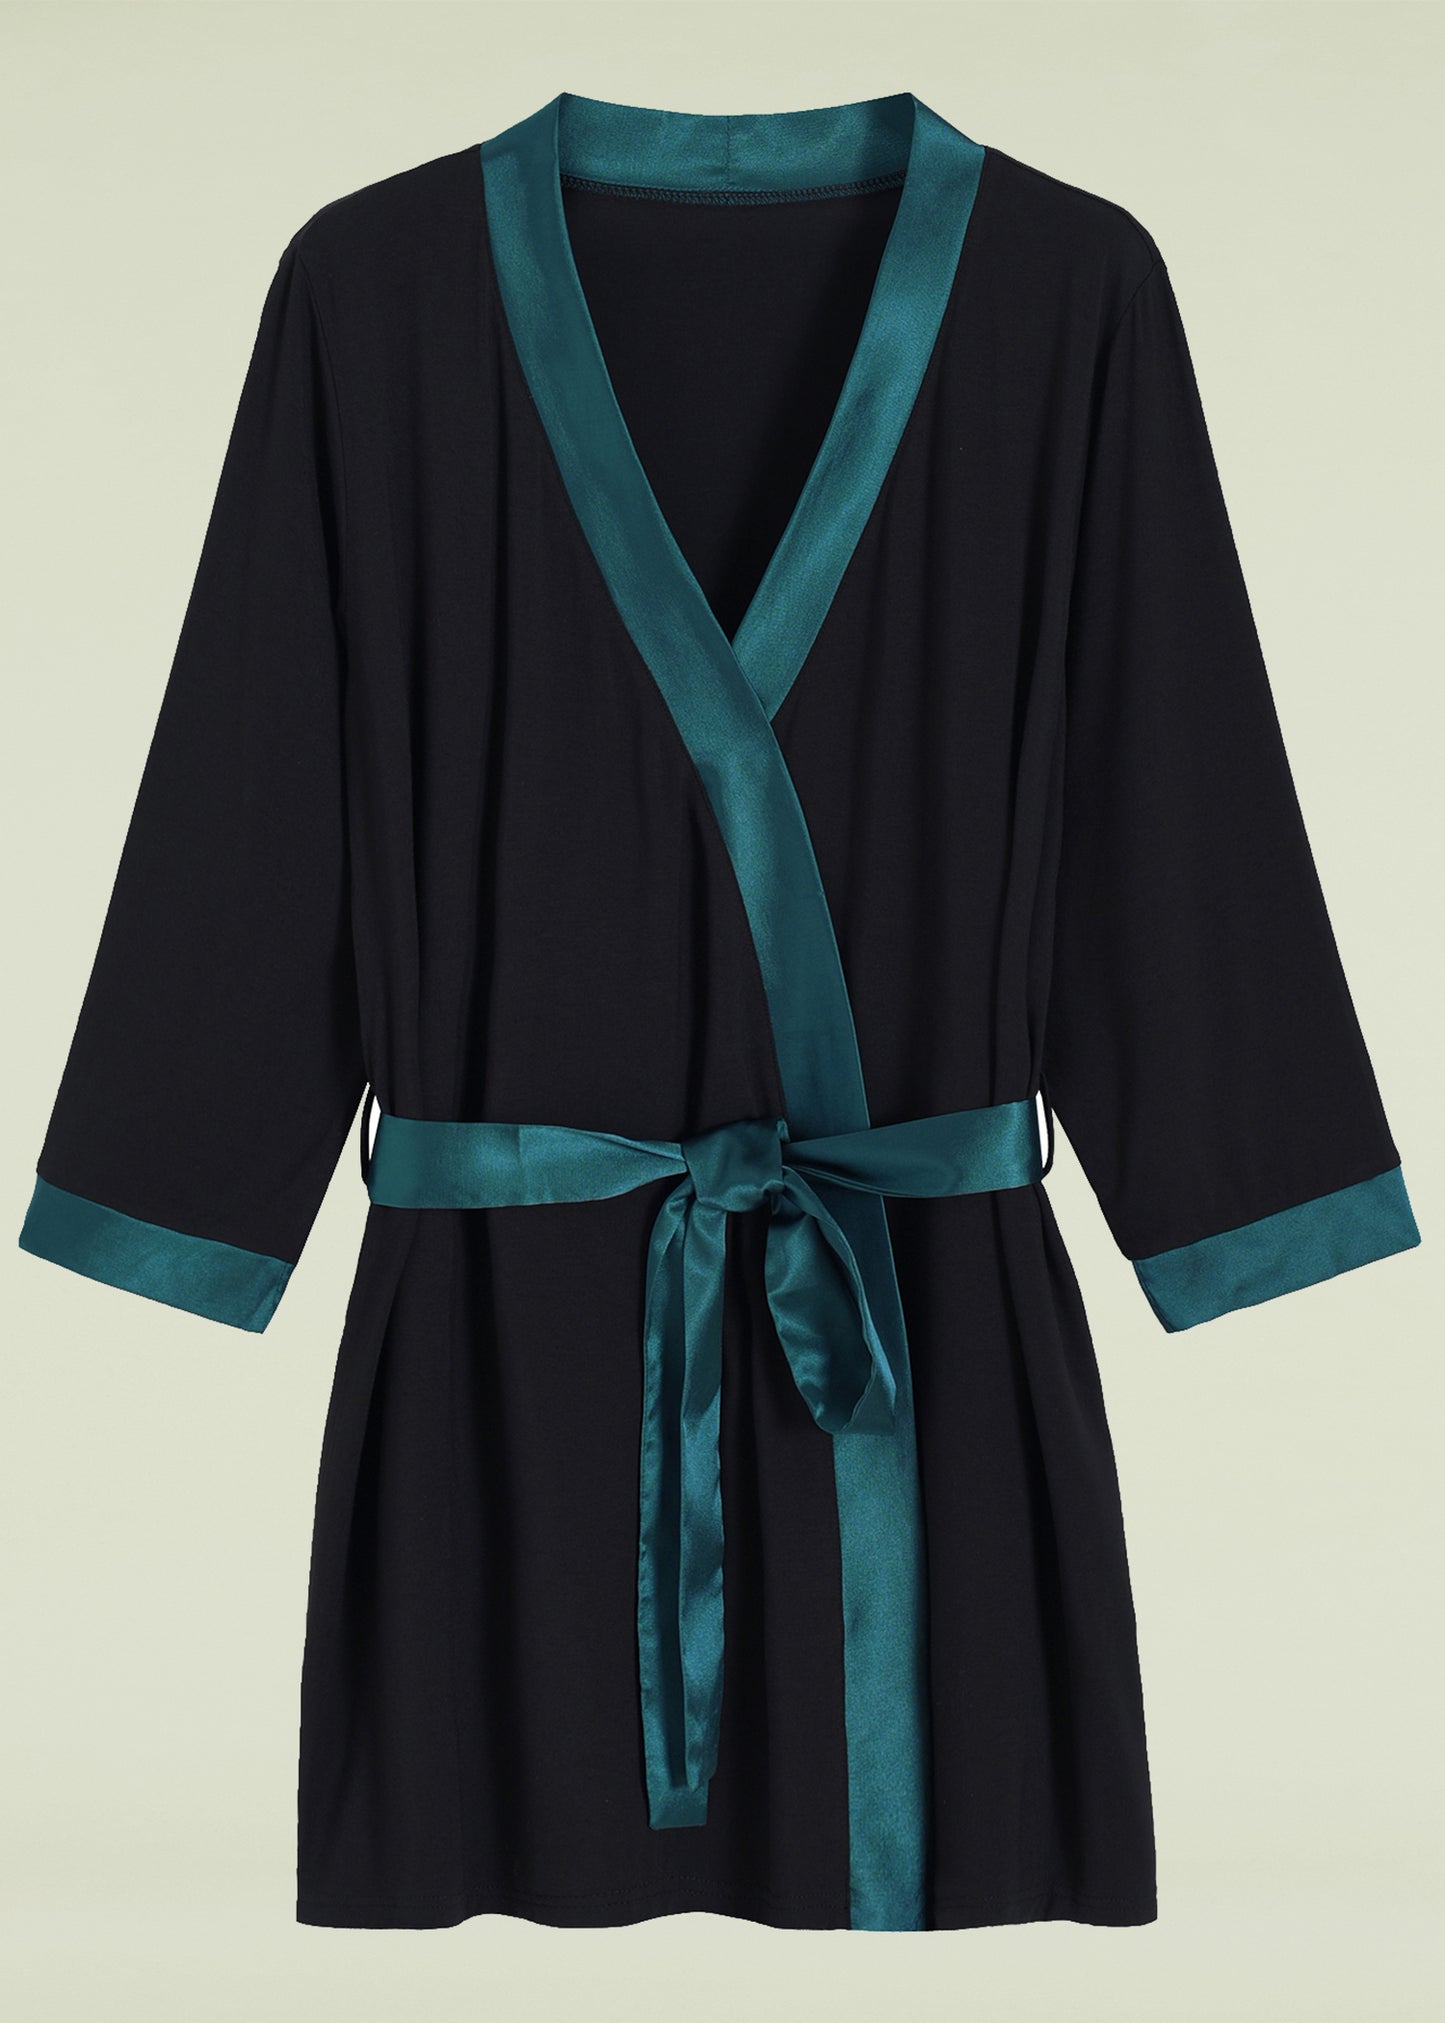 Women's Bamboo Viscose Short Kimono Robe